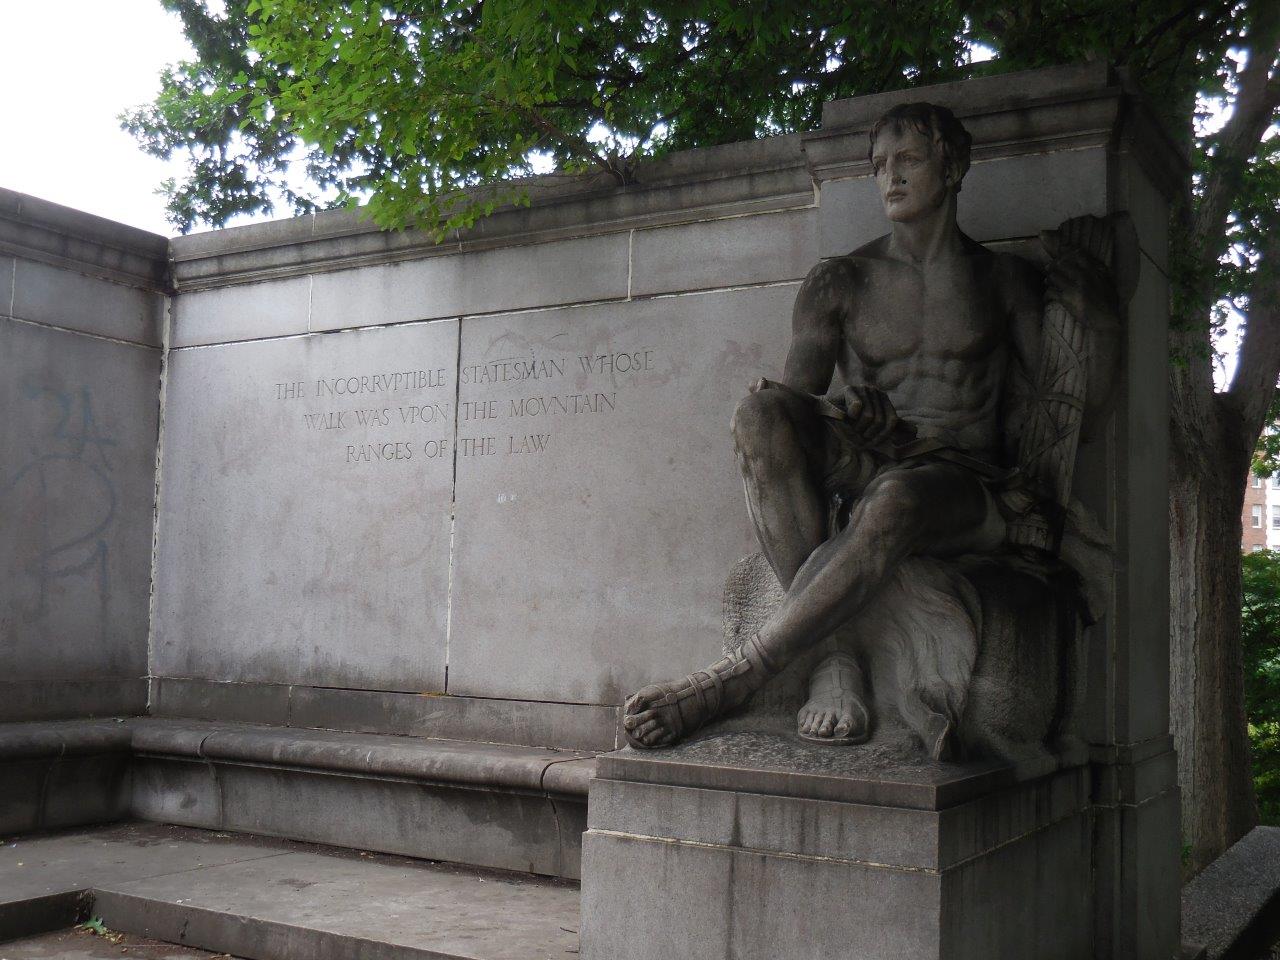 James Buchanan statue in Washington, D.C.